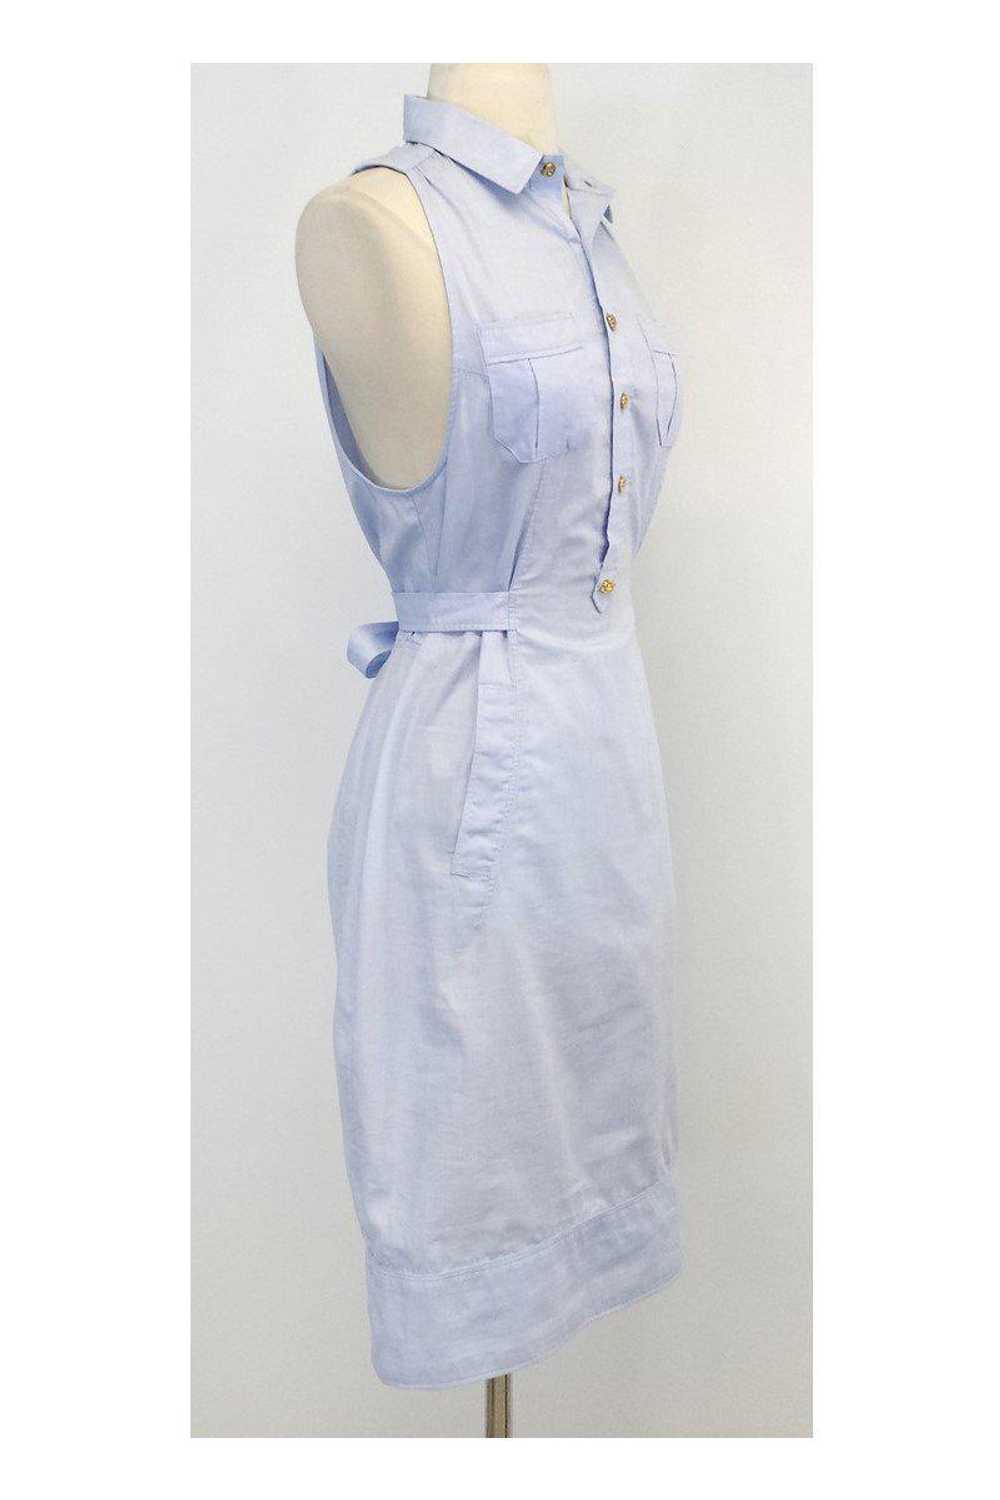 DSQUARED2 - Light Blue Cotton Sleeveless Shirtdre… - image 2